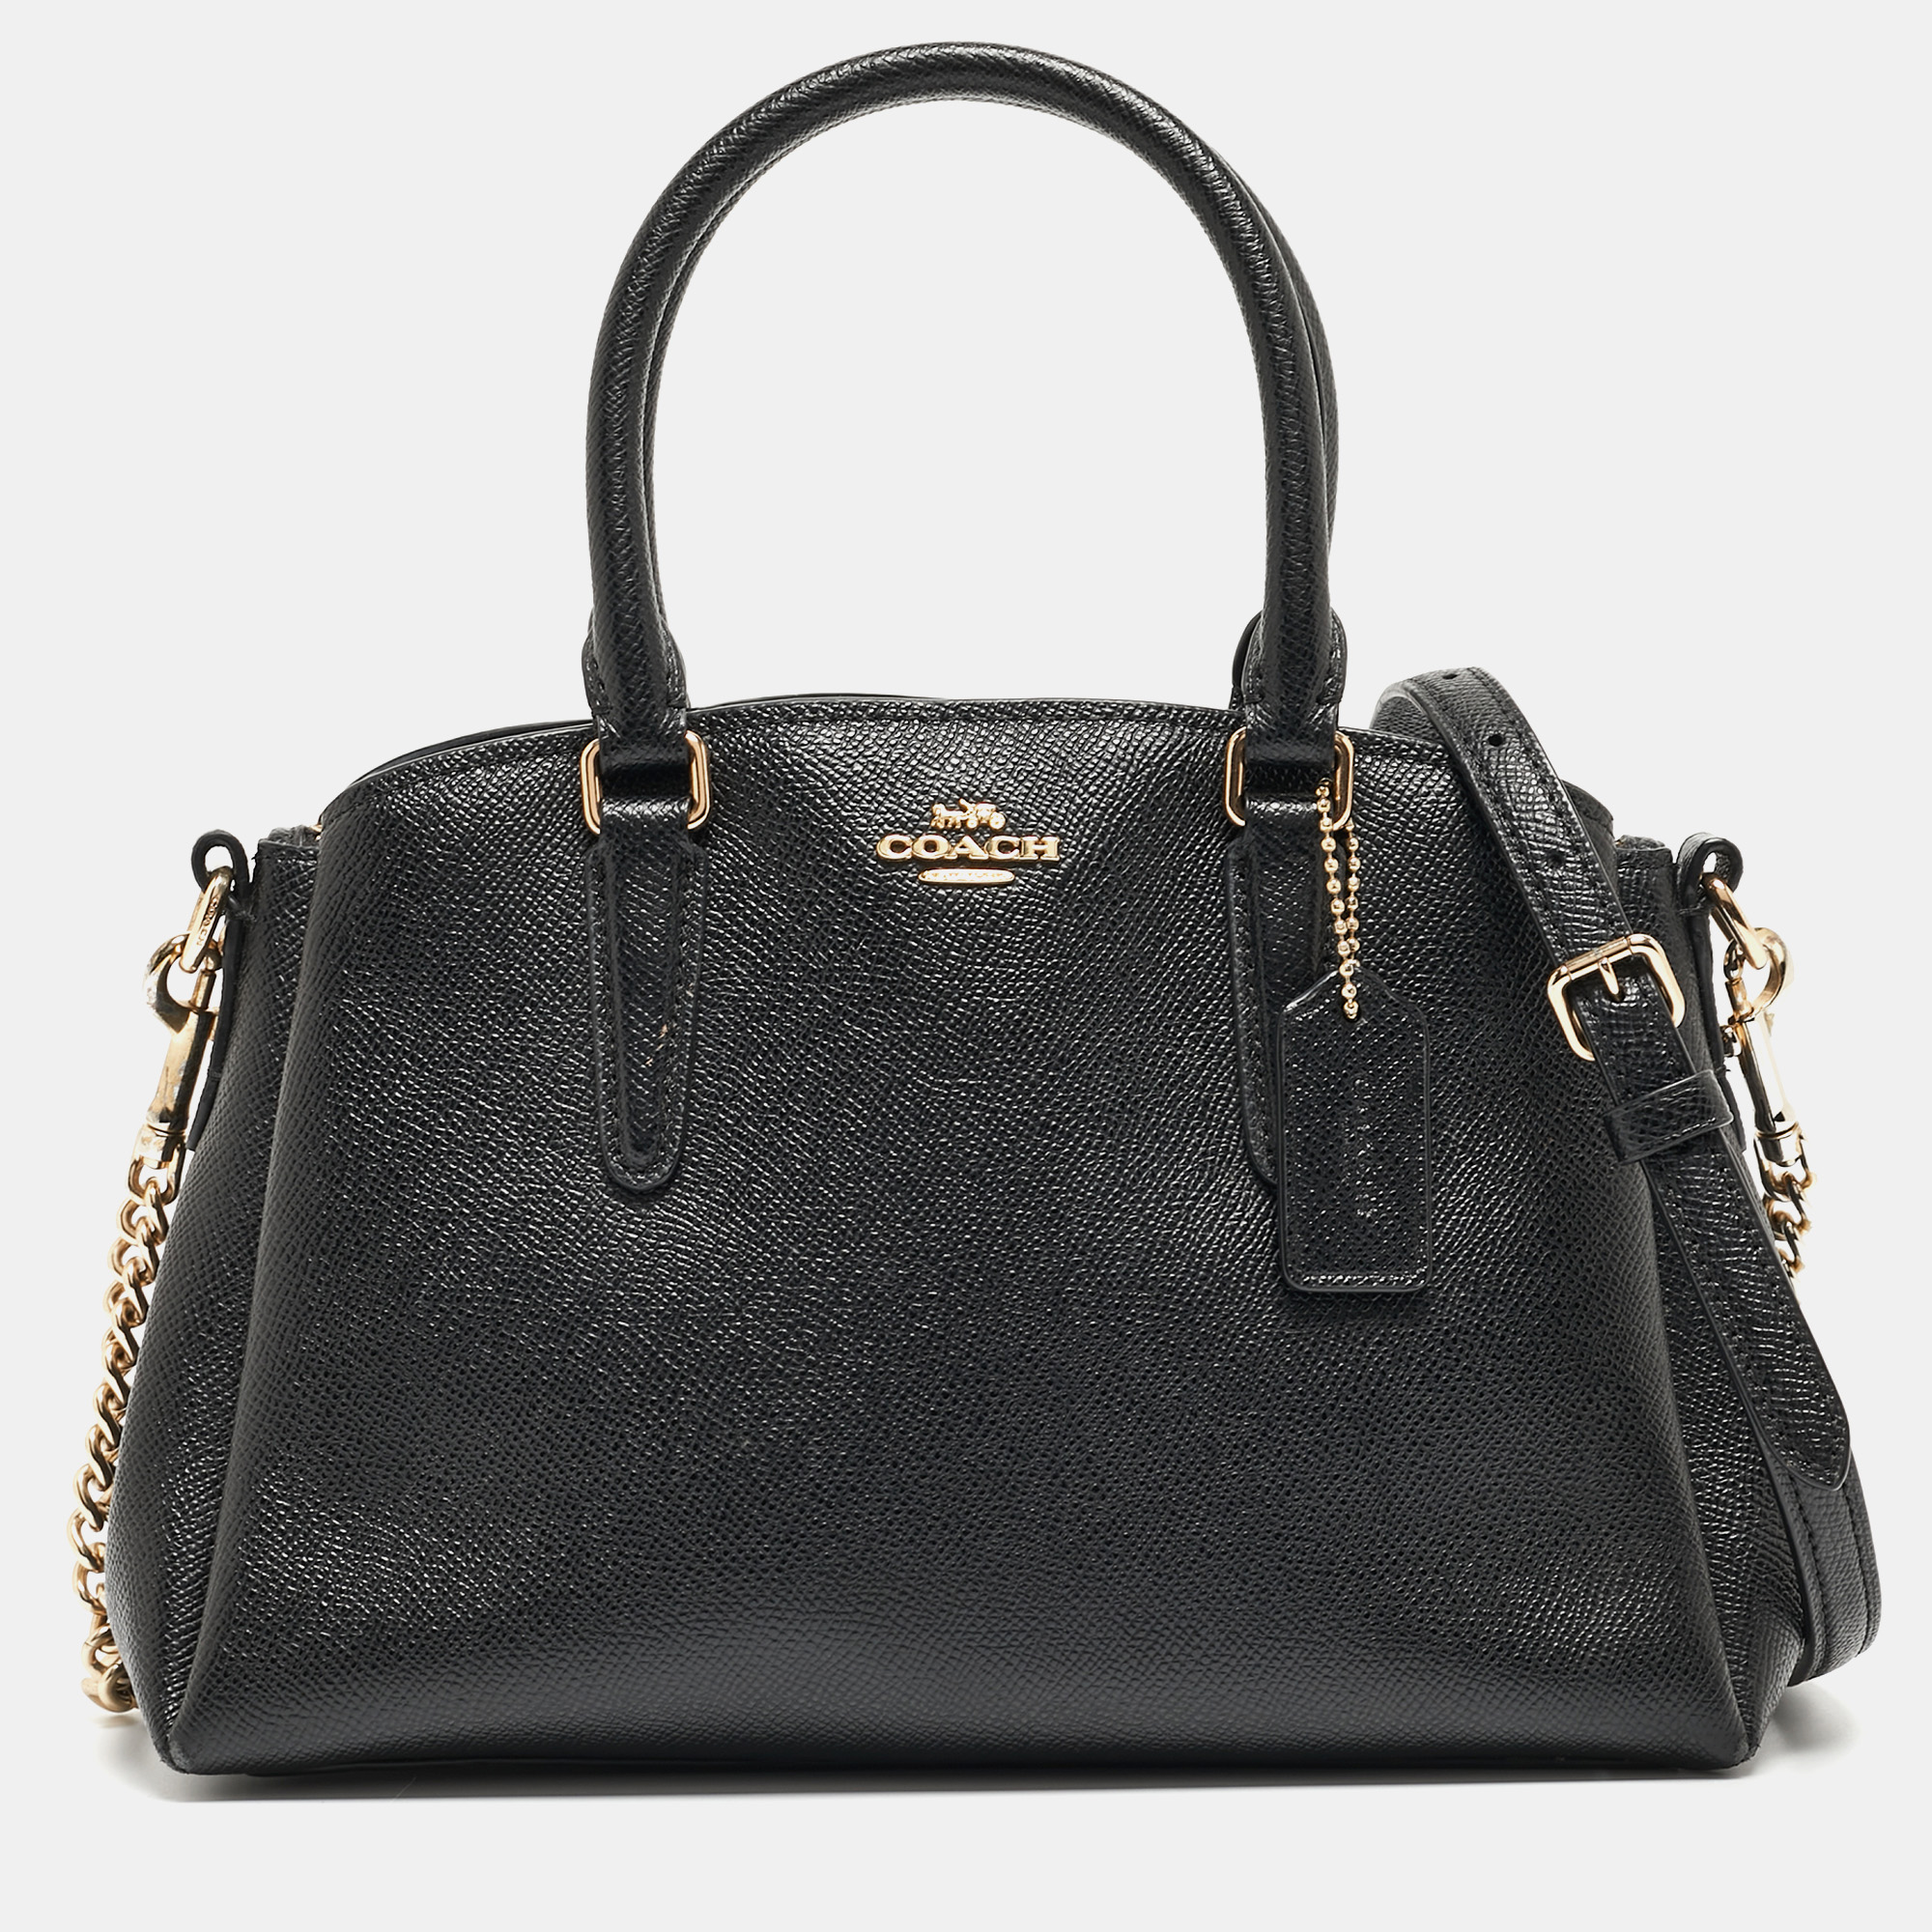 Coach black leather mini sage carryall satchel